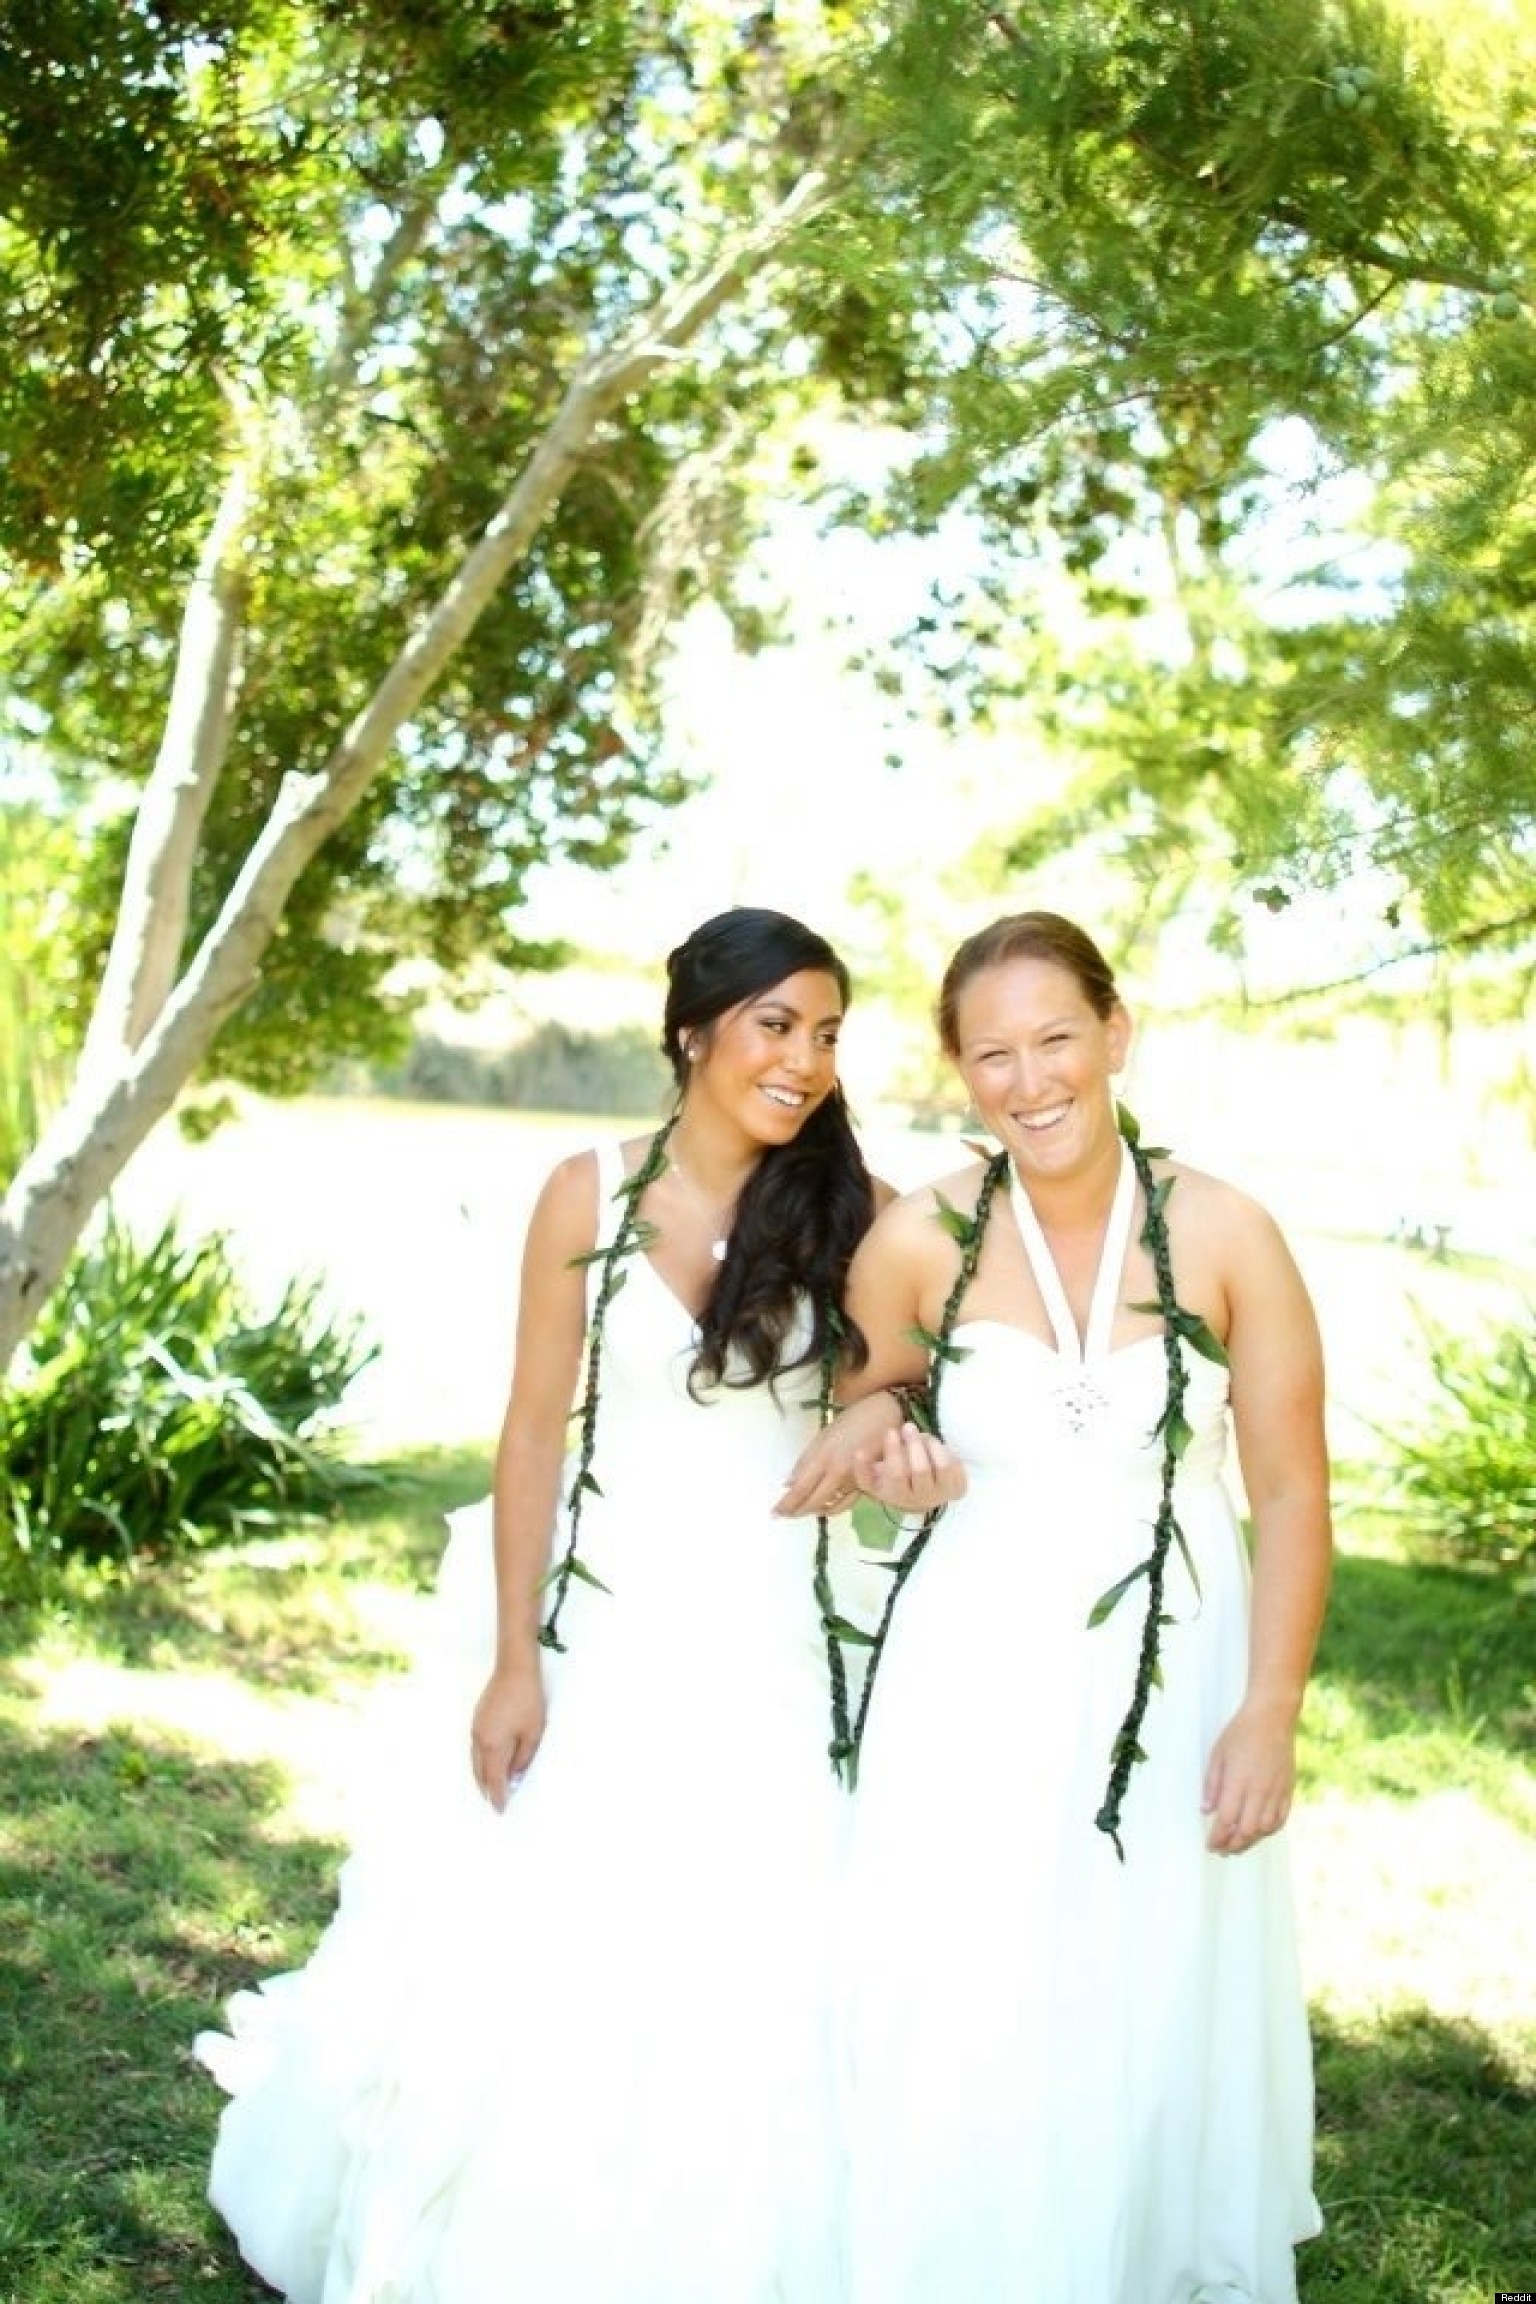 Lesbian Weddings Photo Brides Celebrated Their Big Day